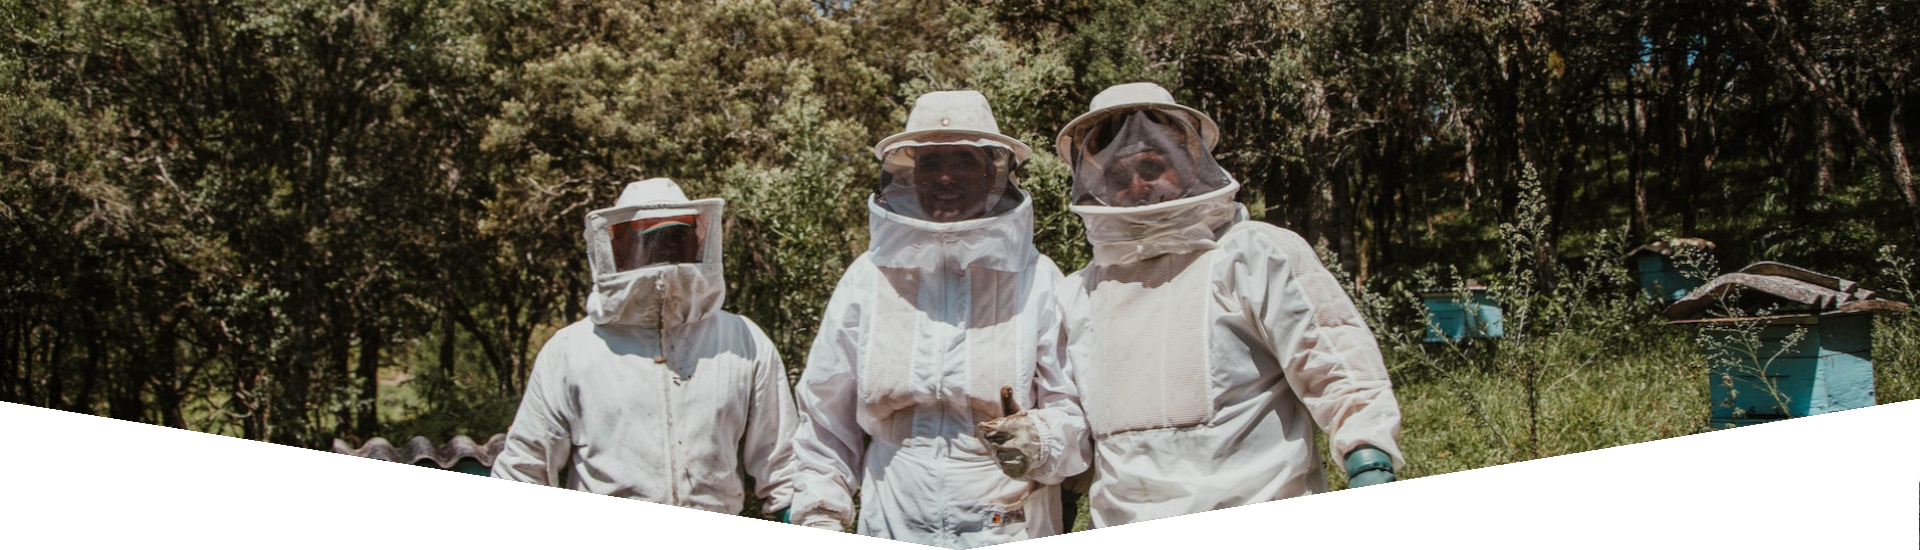 Beekeeper Protective Clothing